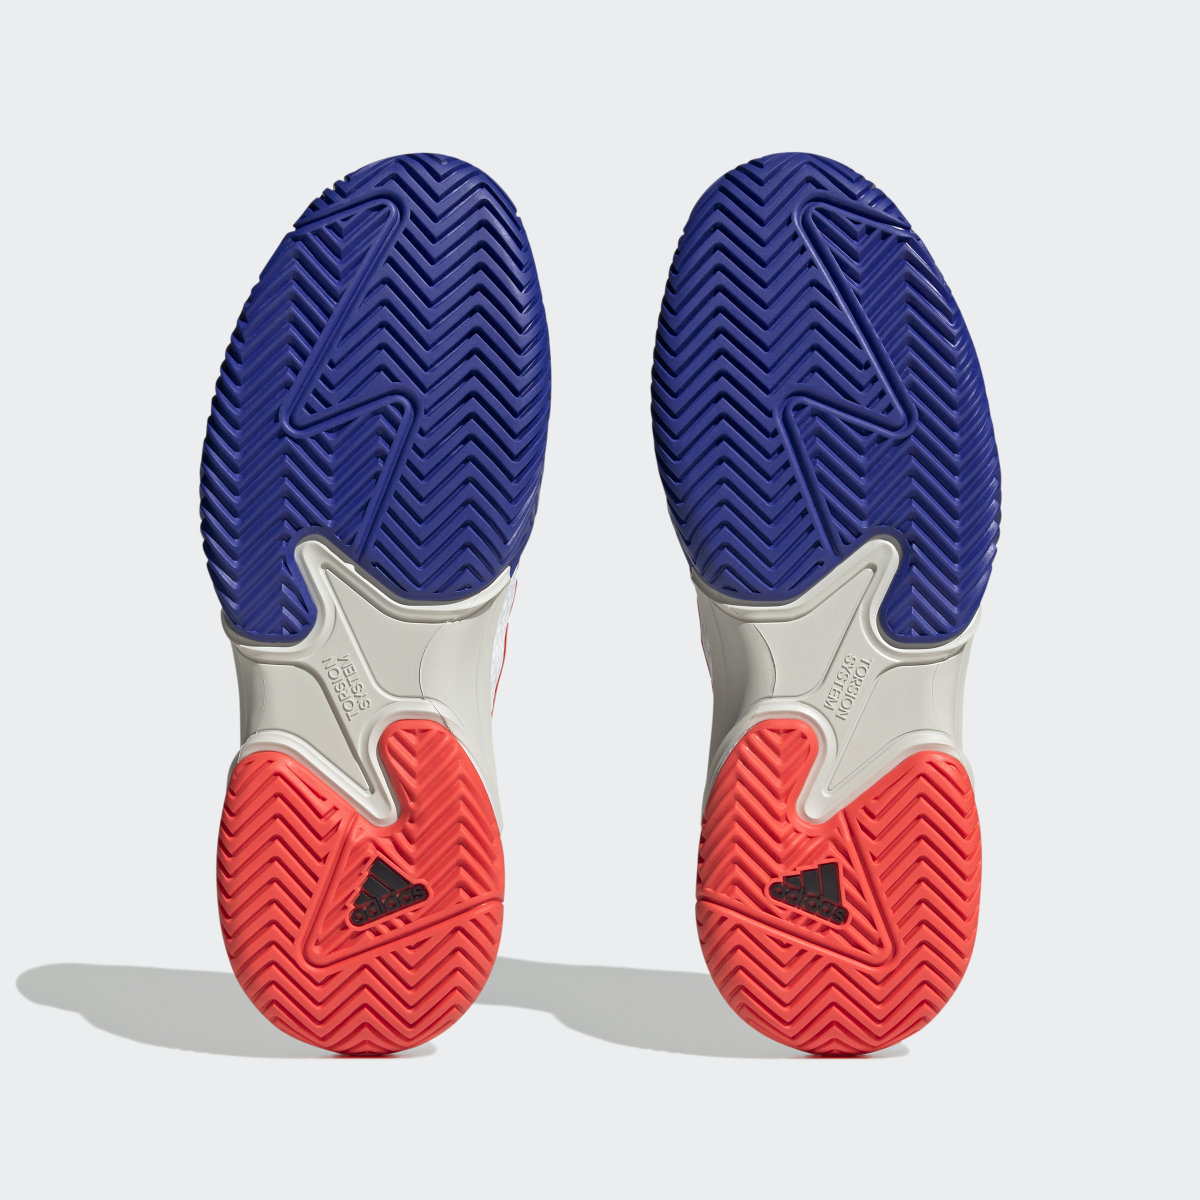 Adidas Barricade Tennis Shoes. 10